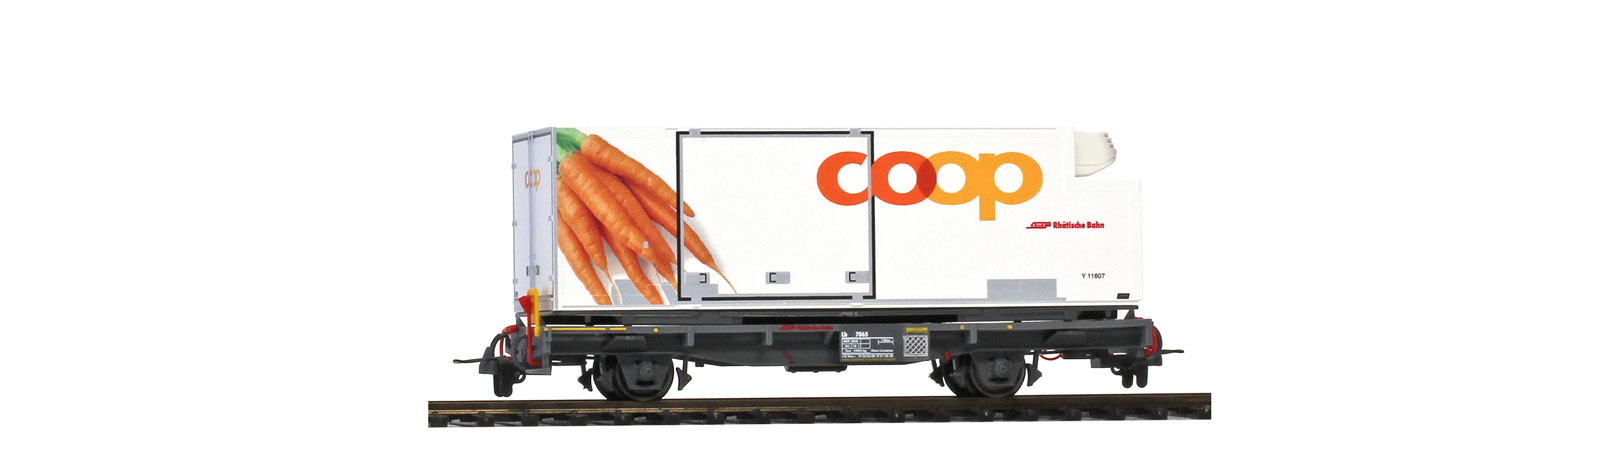 BEMO 2269 127 RhB Lb-v 7881 Container Car 'Coop' Carrot